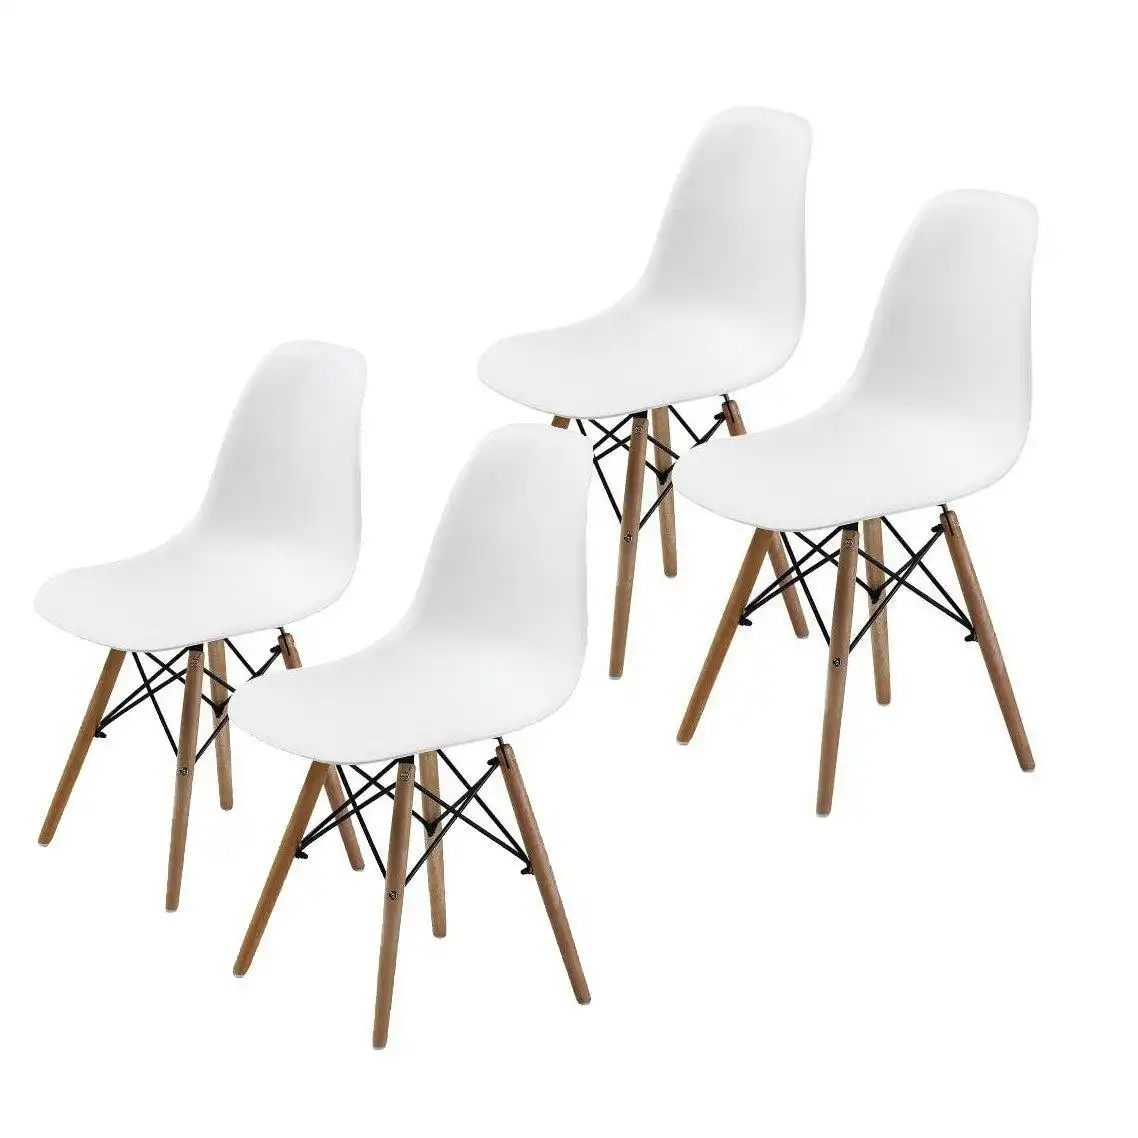 Chotto - Mana Dining Chairs - White x 4